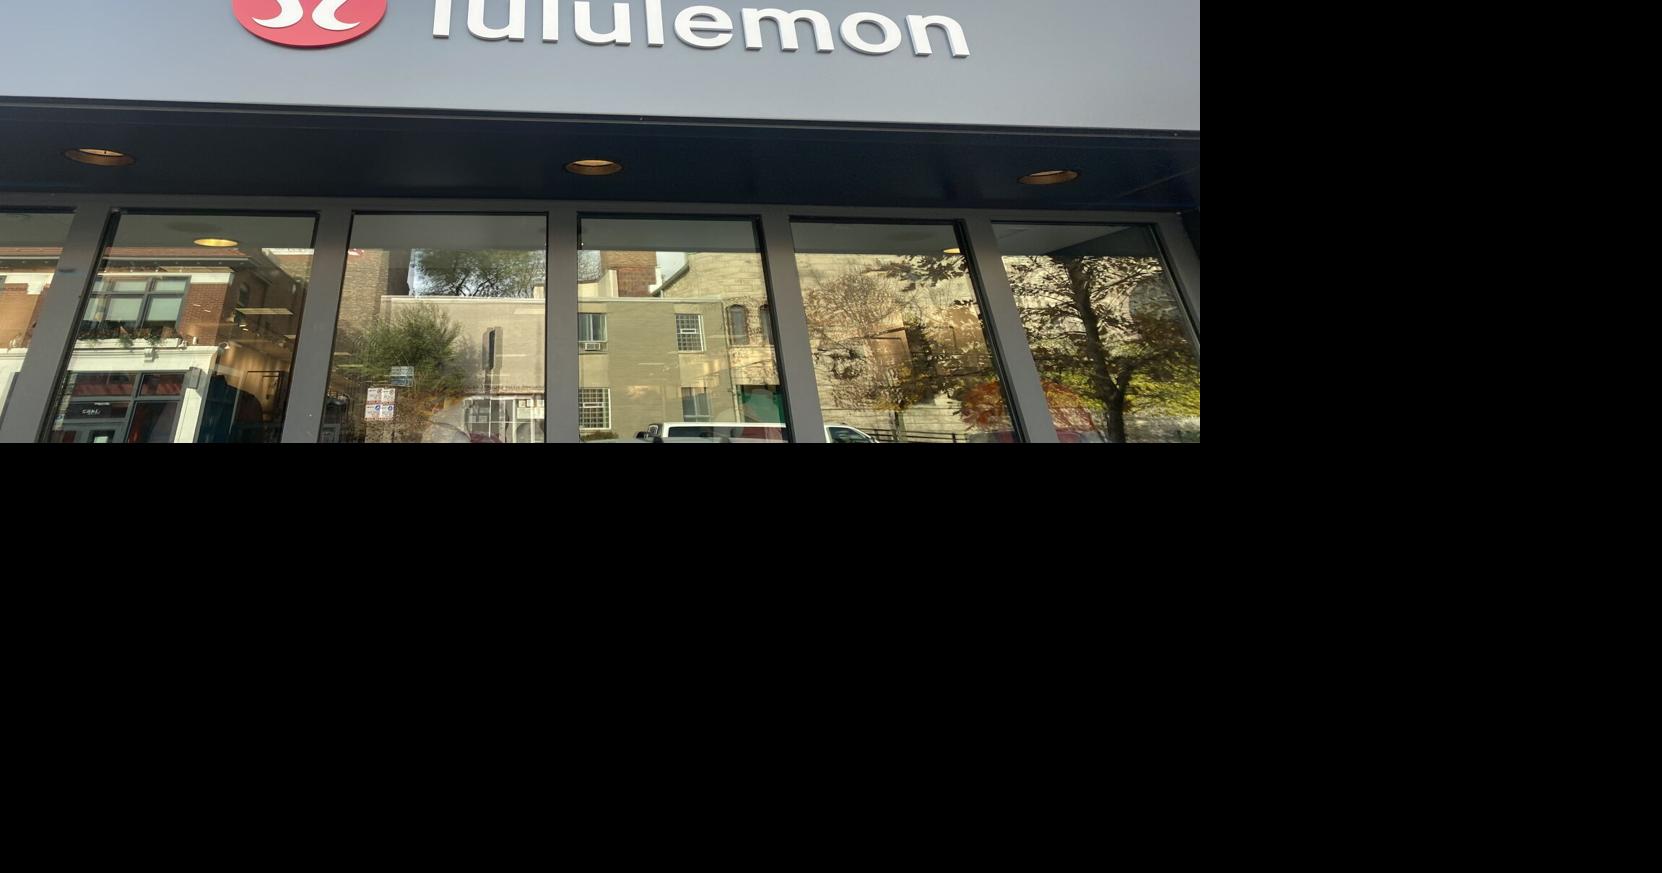 Former employees of Hyde Park's shuttered Lululemon file racial